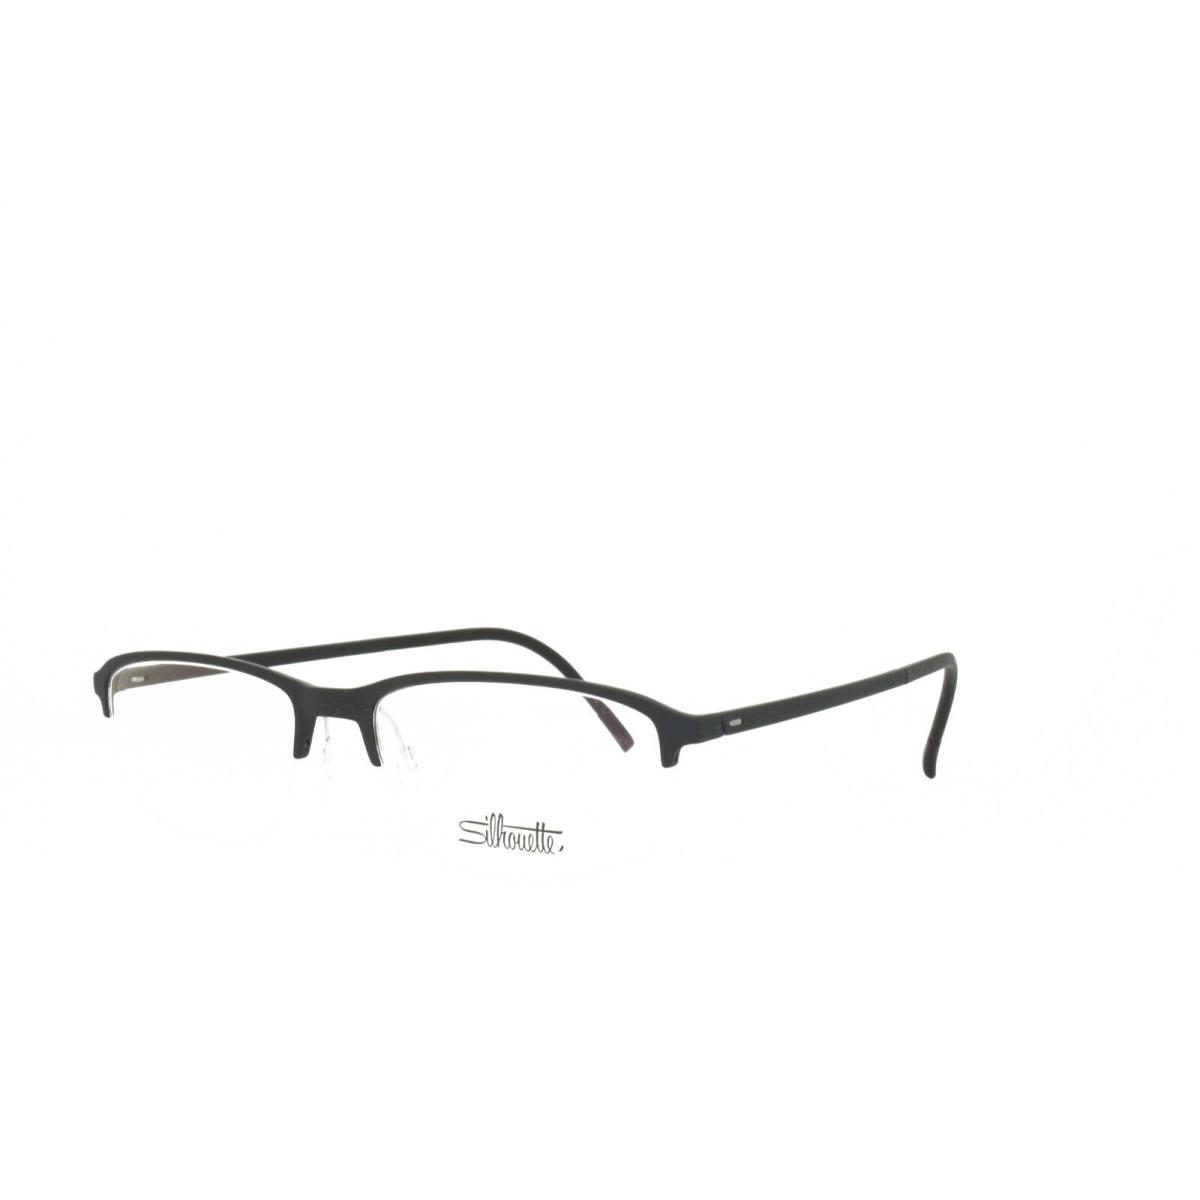 Silhouette Spx Illusion Nylor 2933 75 9110 Eyeglasses 53-17-140 Black - Frame: Black